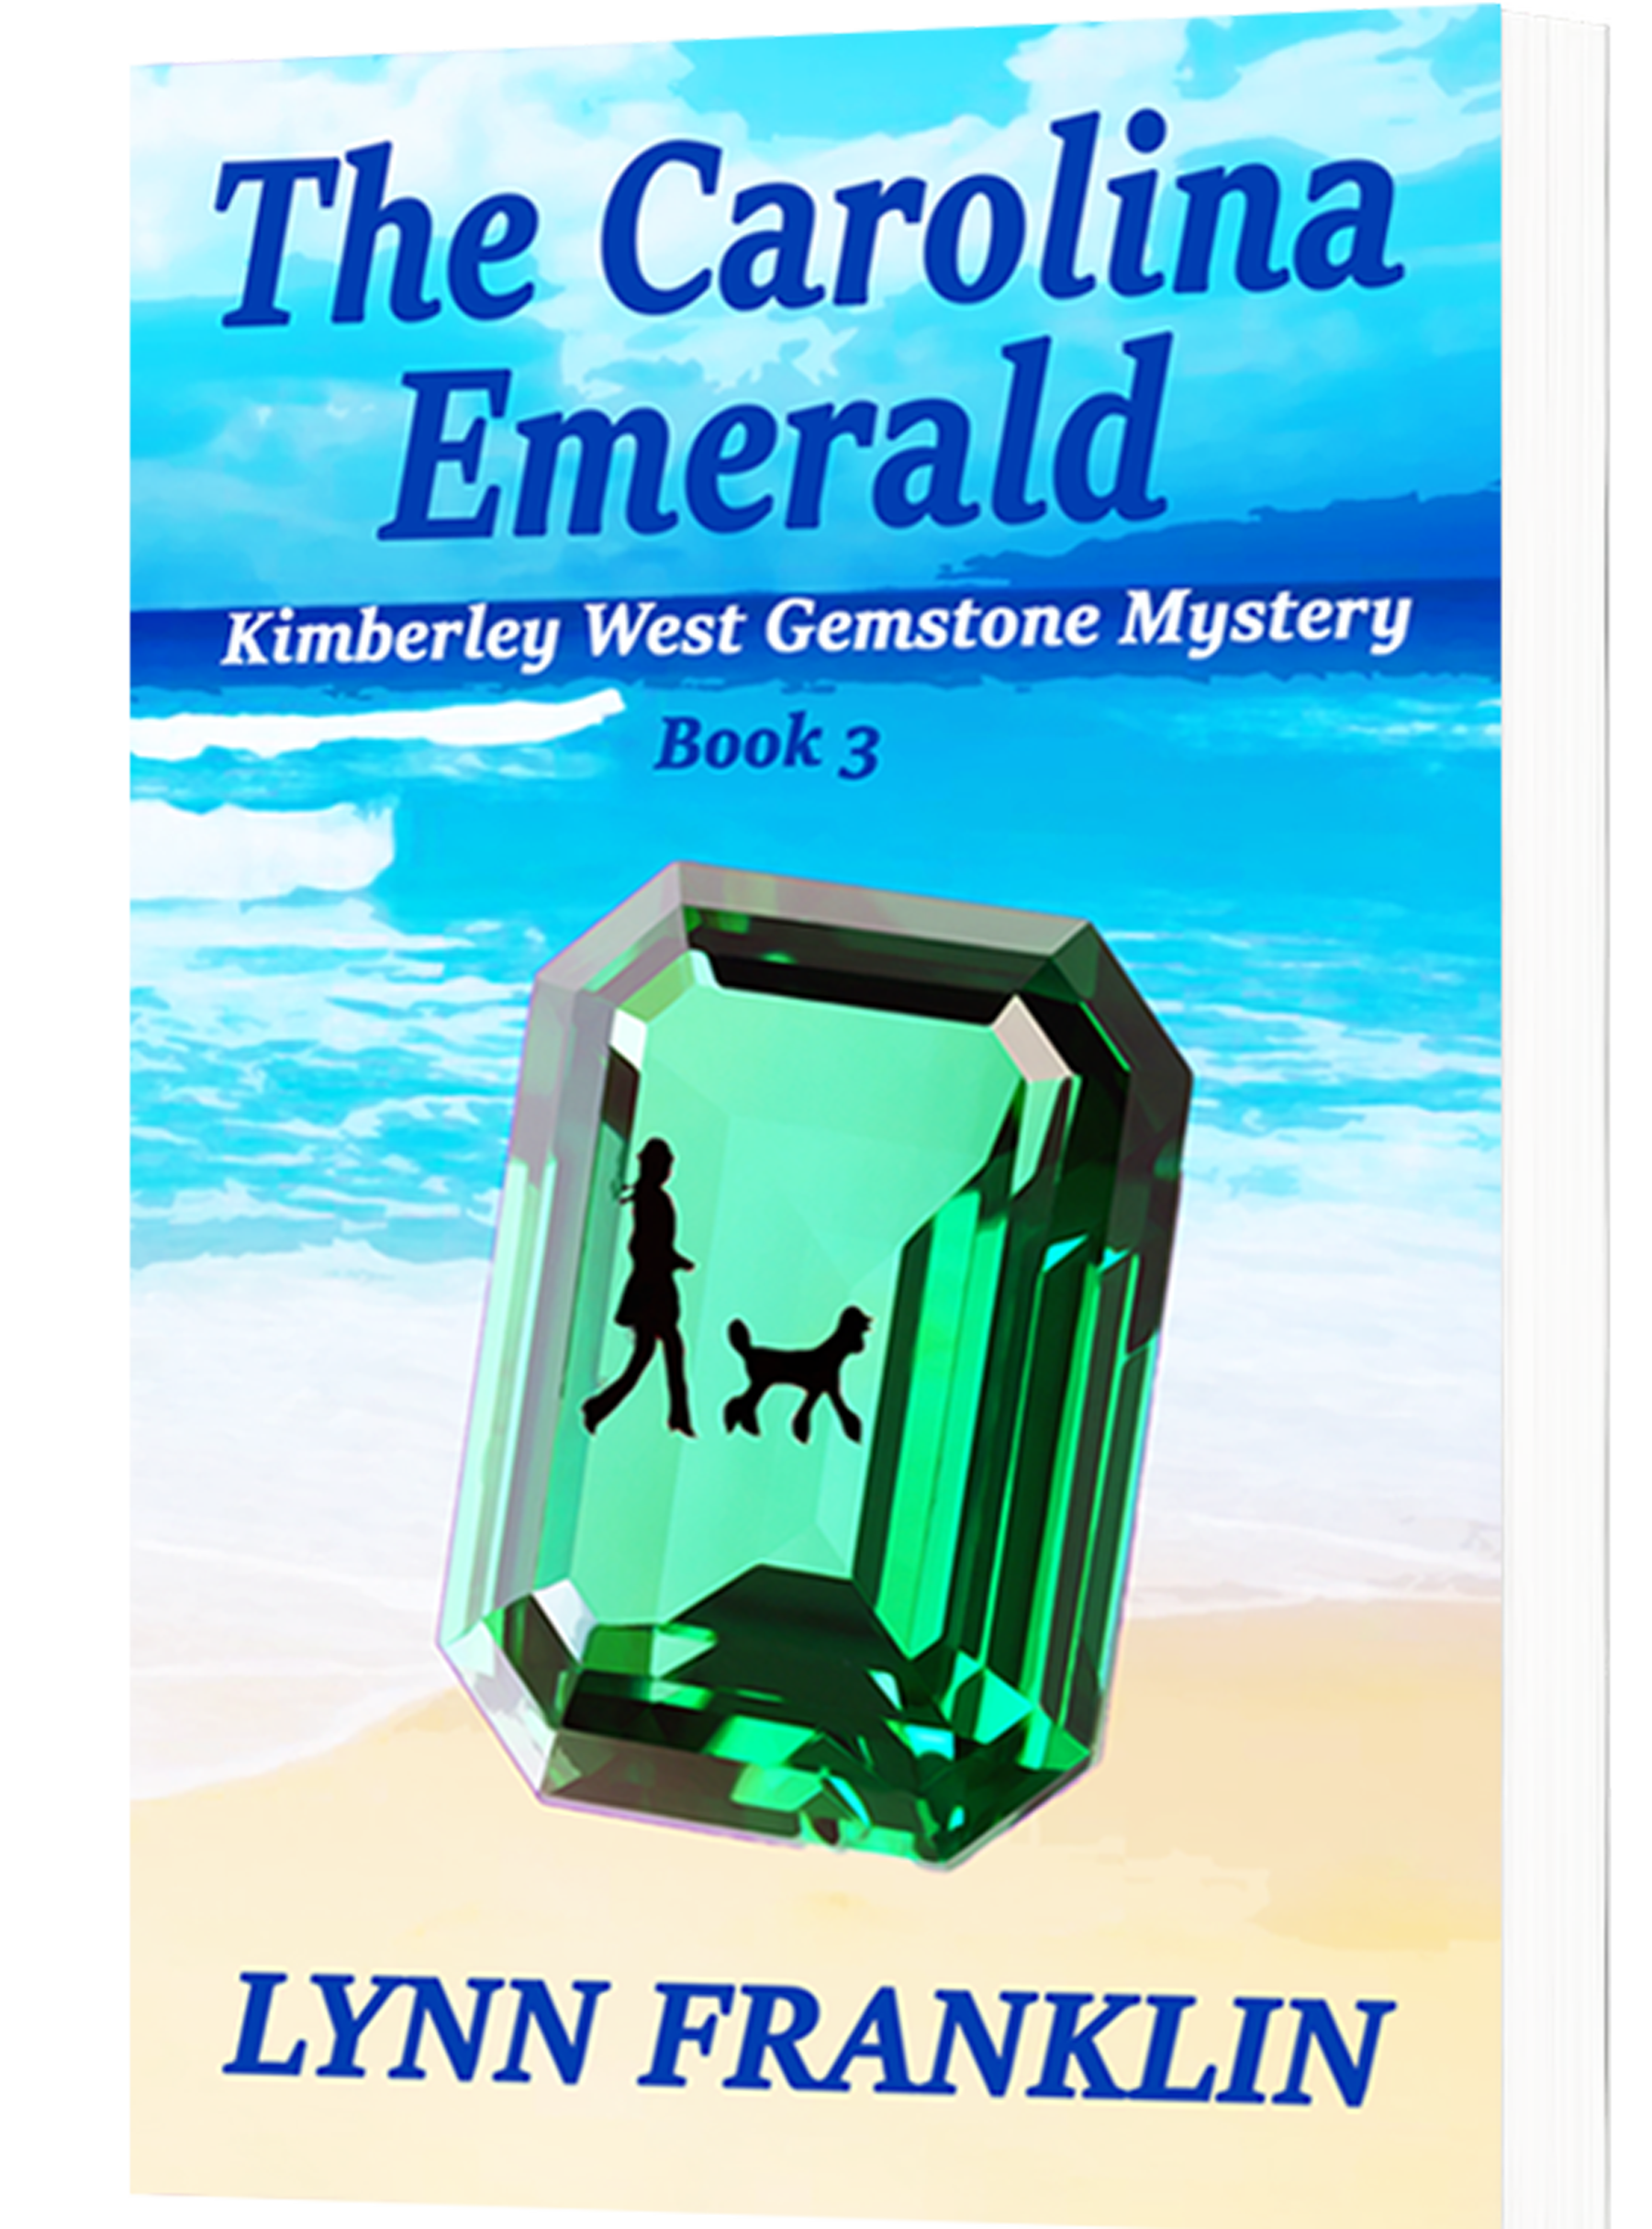 The Carolina Emerald: Kimberley West Gemstone Mystery #3